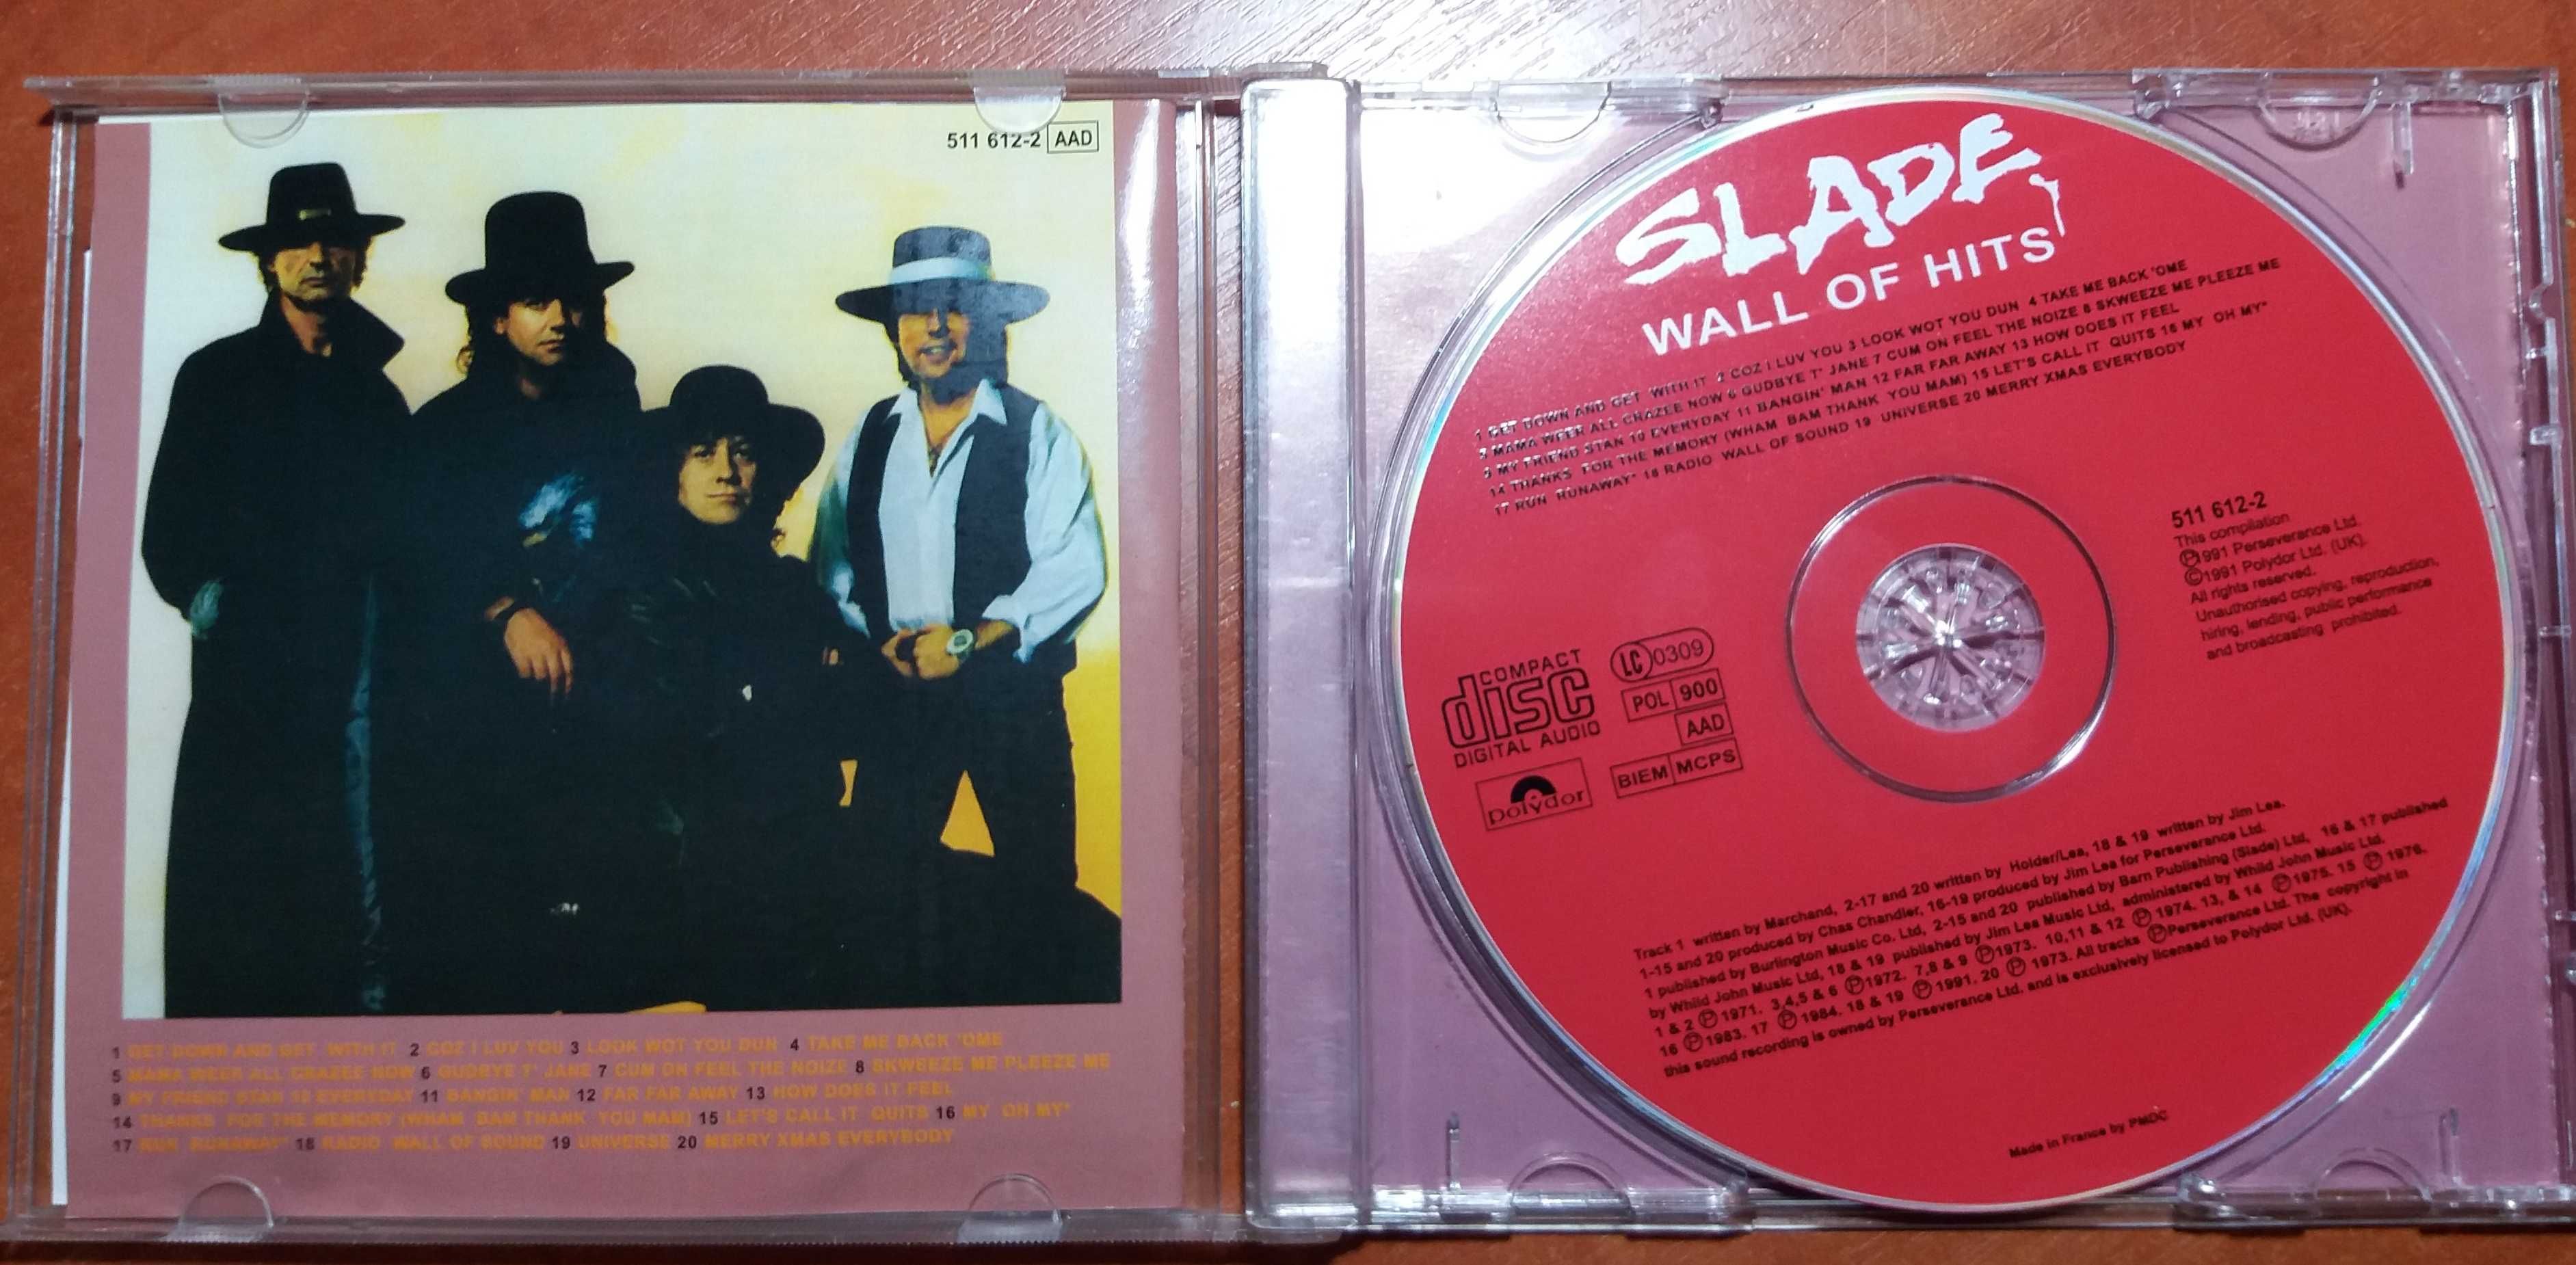 музыкальный CD диск Slade - Wall of Hits